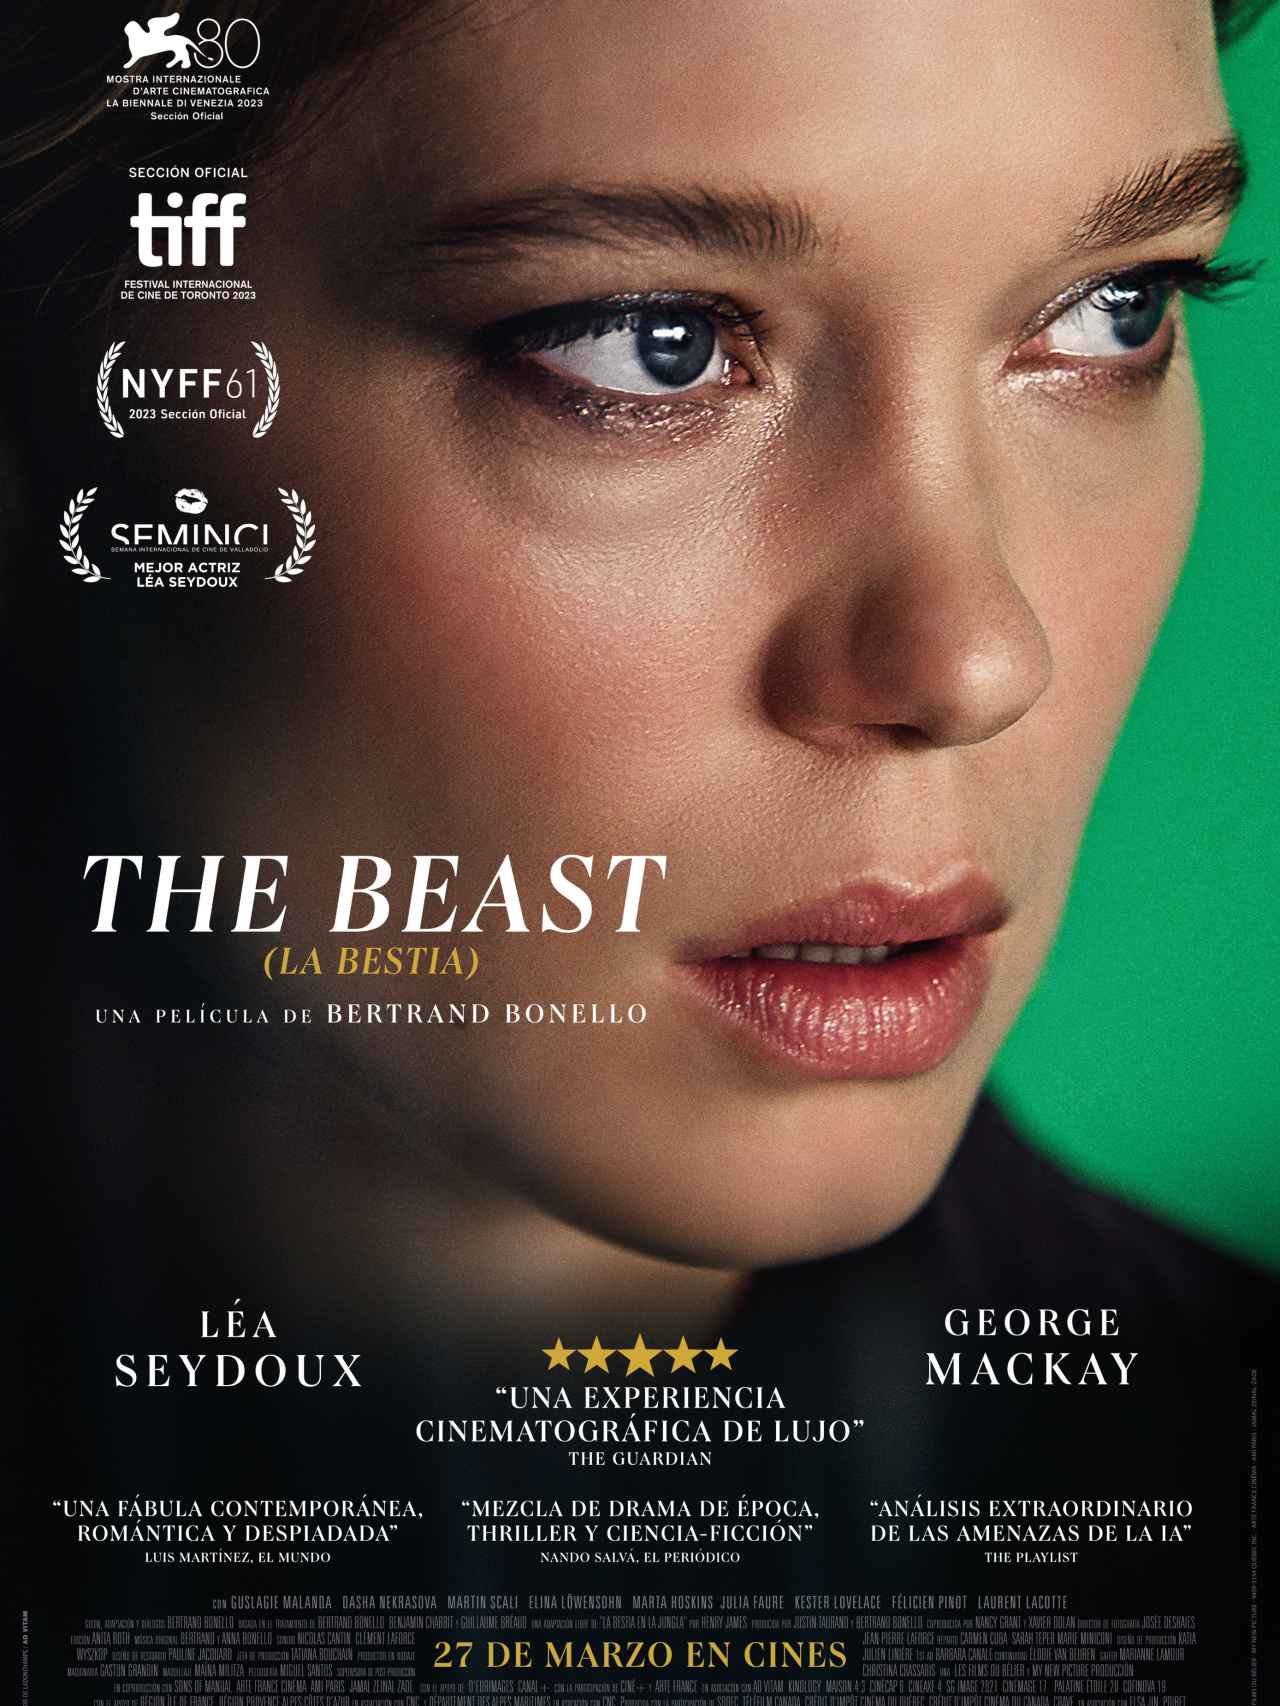 El cartel de 'La bestia', película de Bertrand Bonello